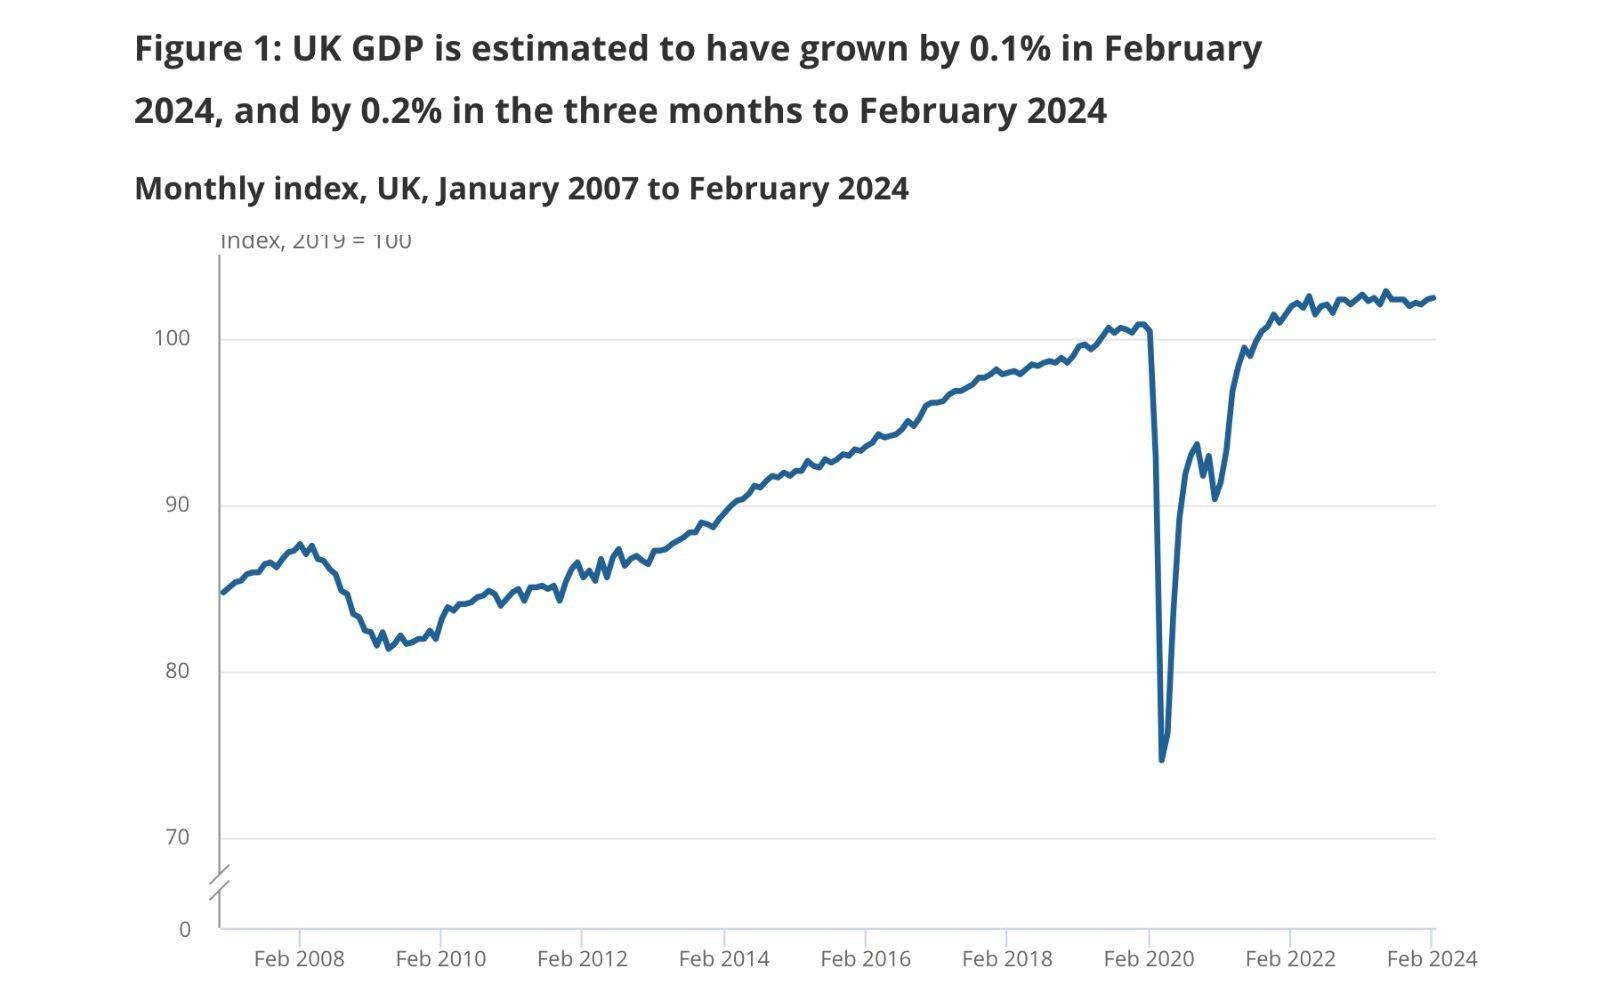 UK GDP